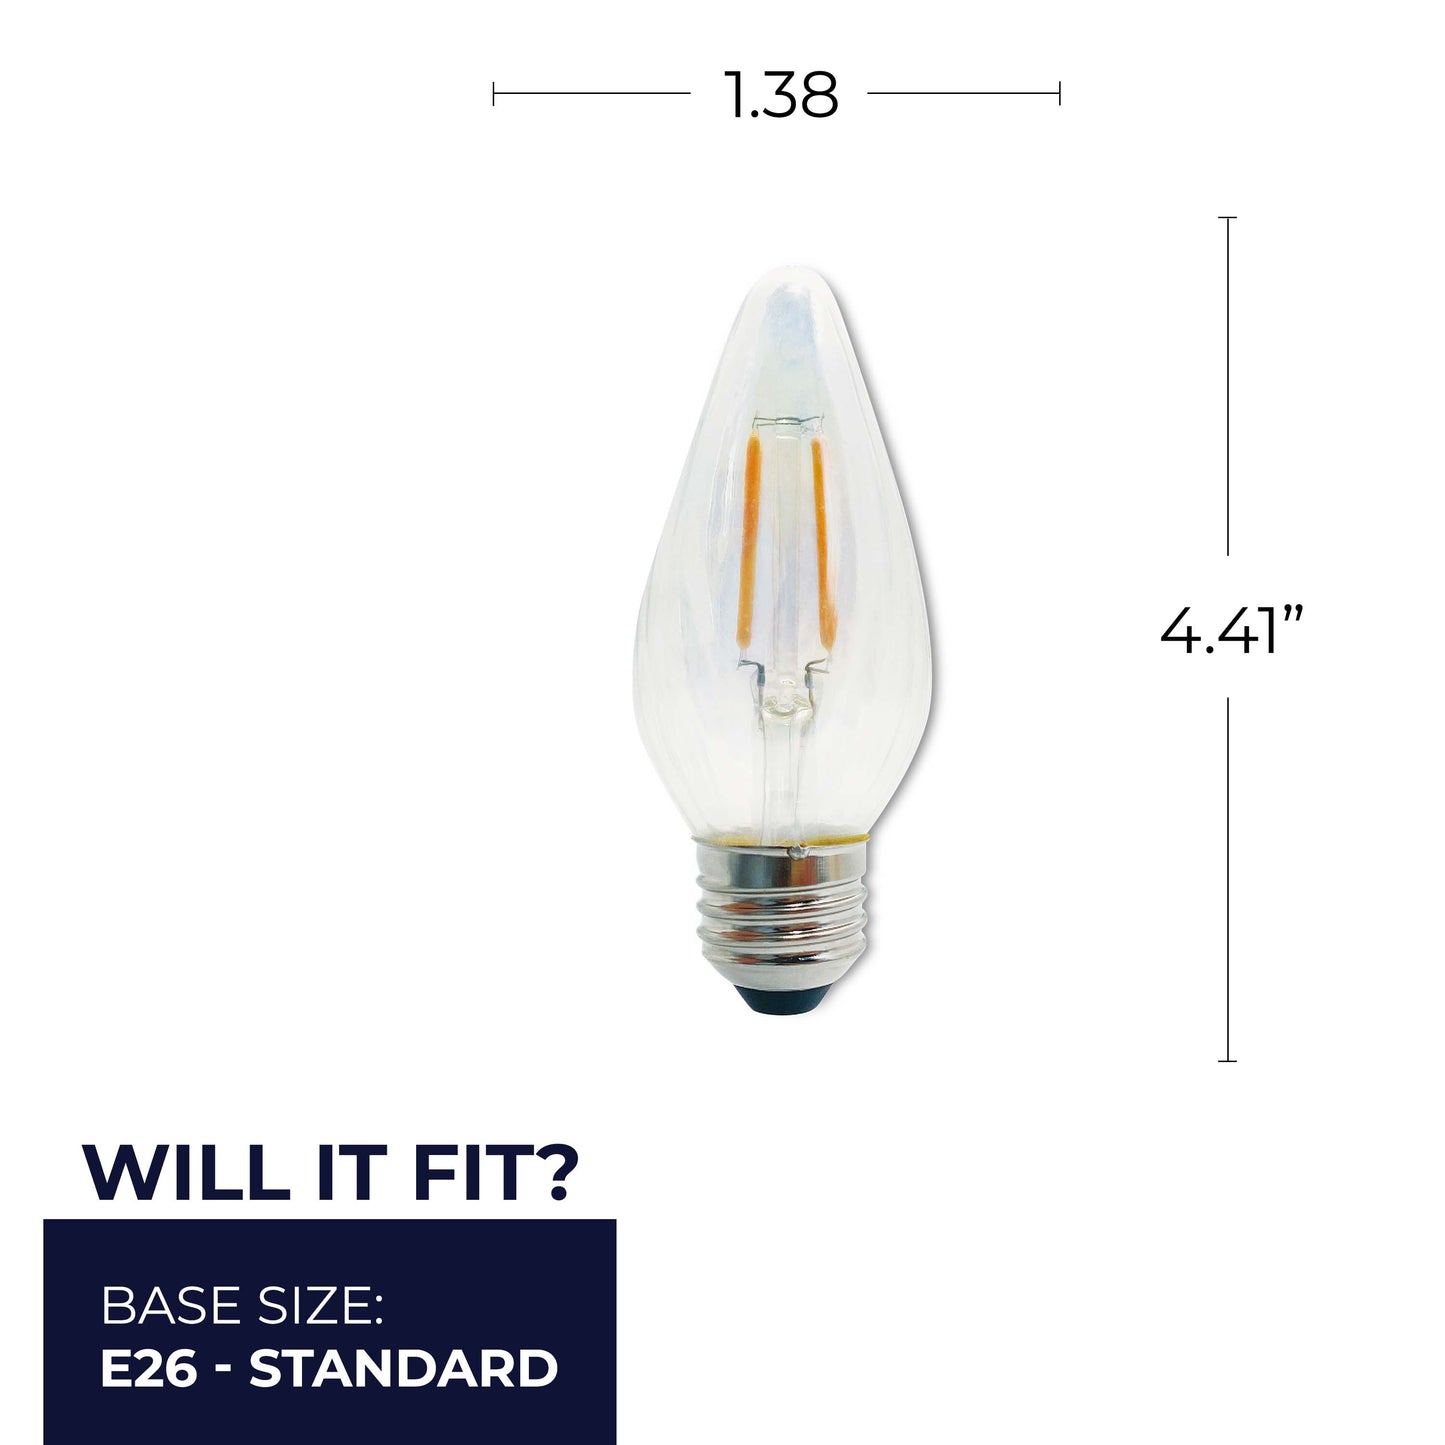 776580 - Filaments Dimmable Clear Fiesta LED Light Bulb - 4 Watt - 2700K - 4 Pack